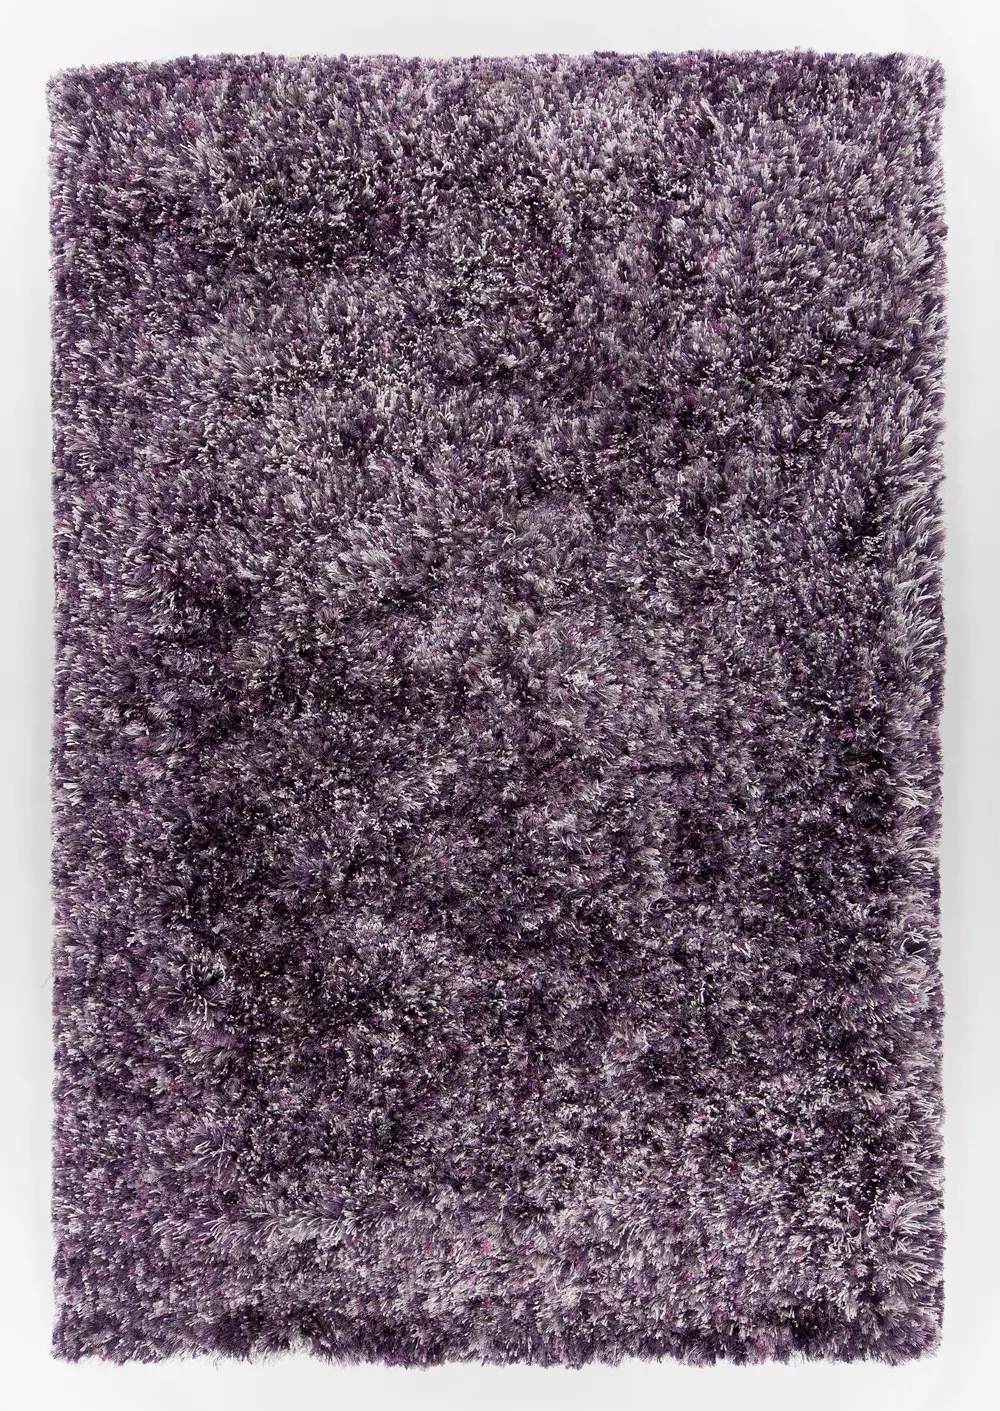 5 x 8 Medium Contemporary Purple Area Rug - Supros-1